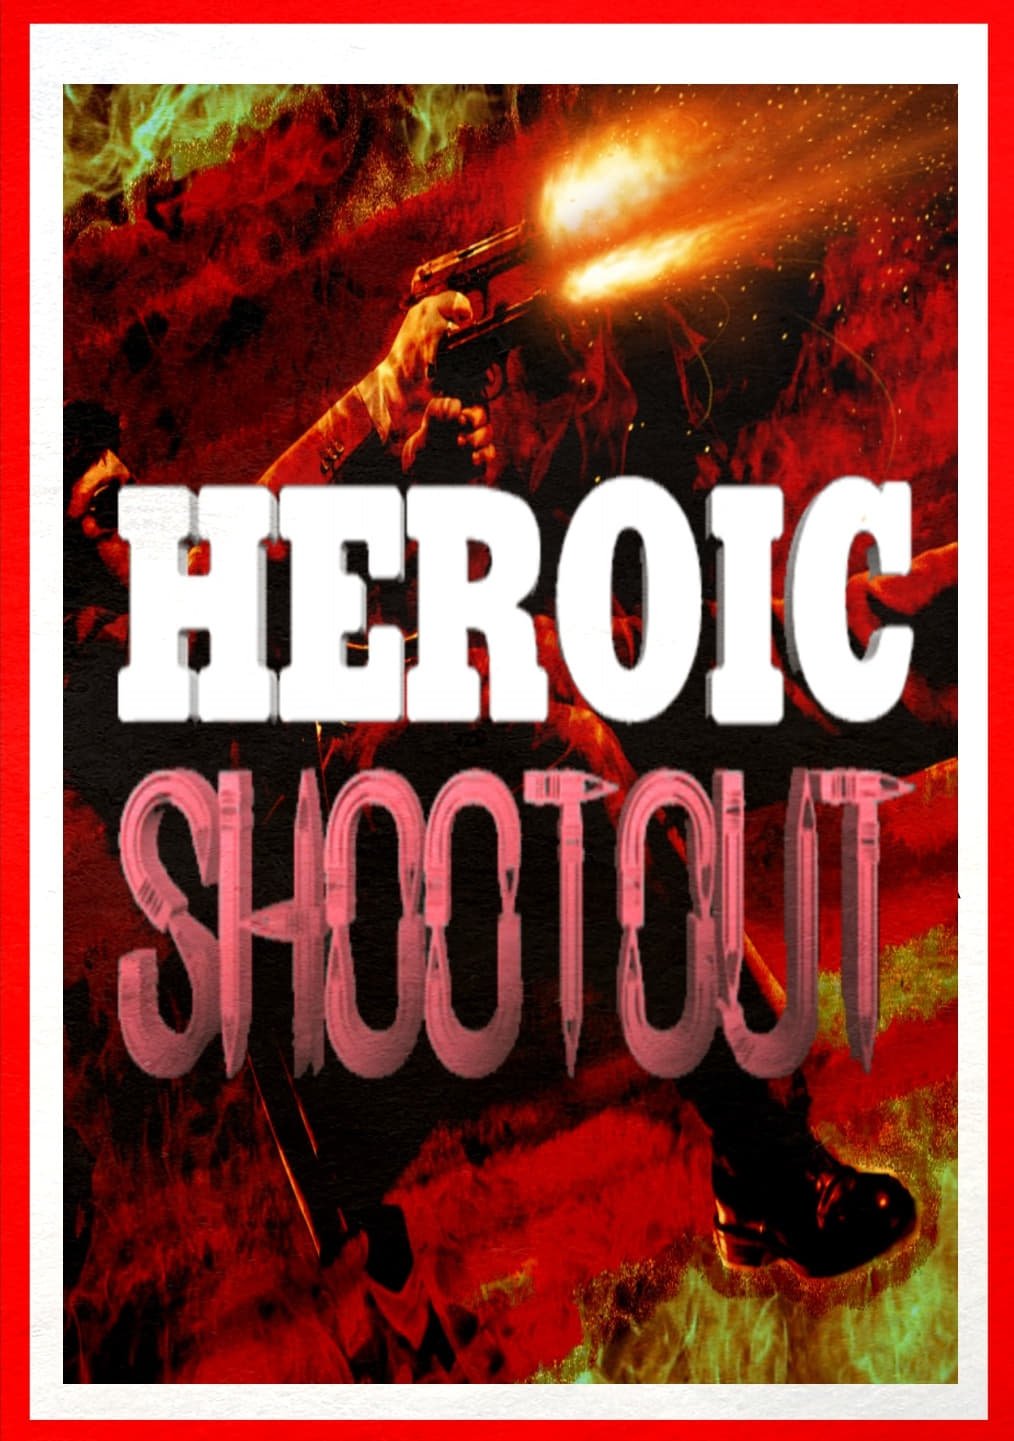 Heroic Shootout